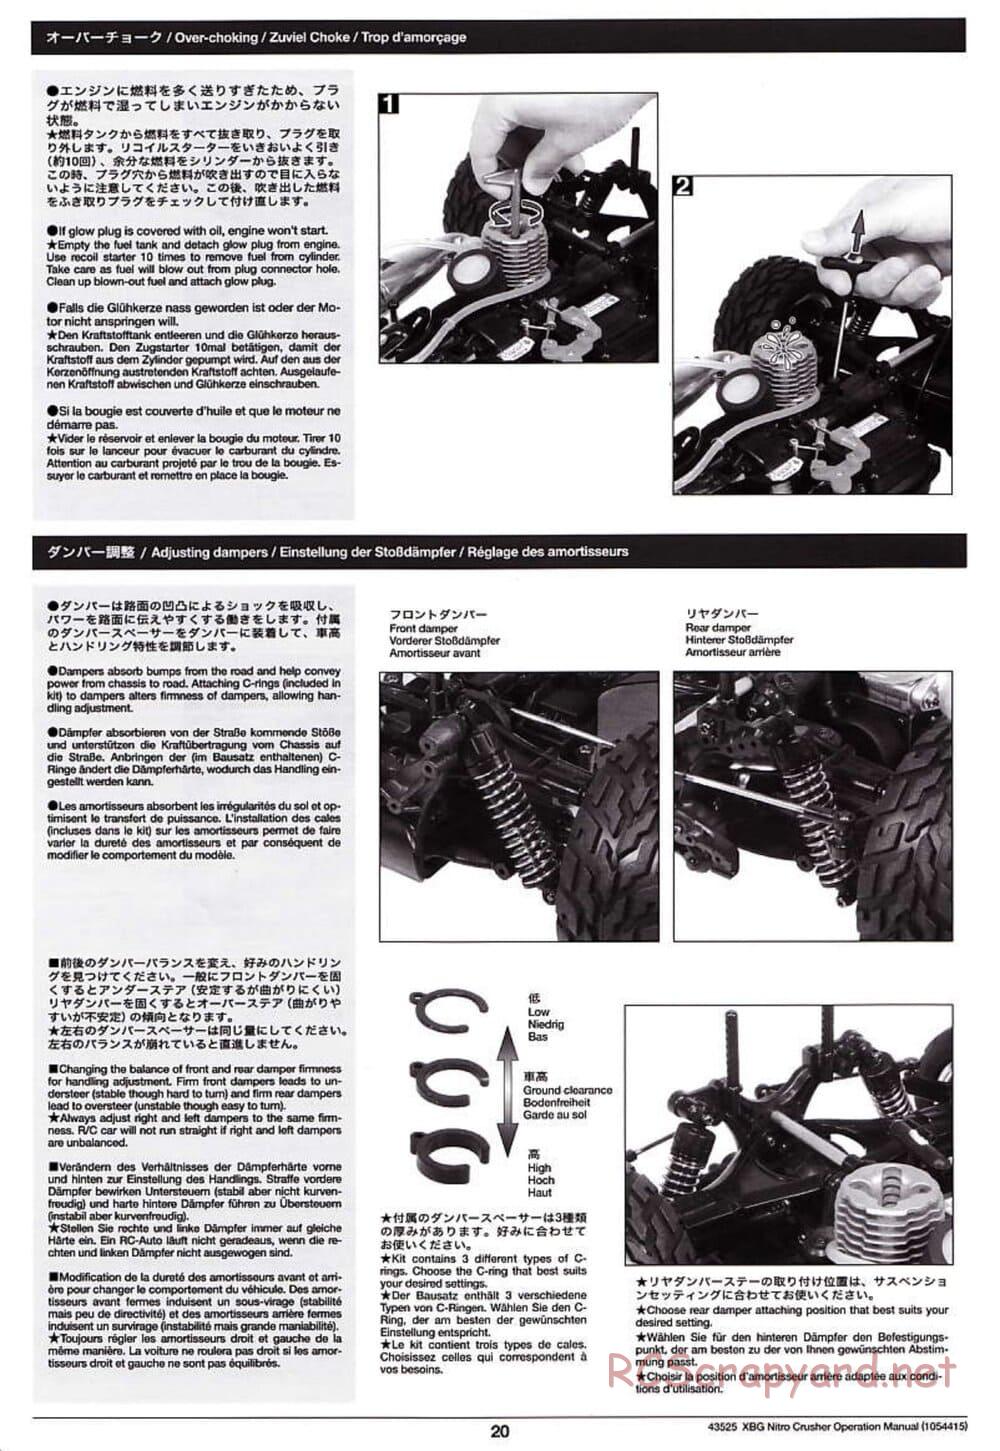 Tamiya - Nitro Crusher - NDF-01T - Operating Manual - Page 20